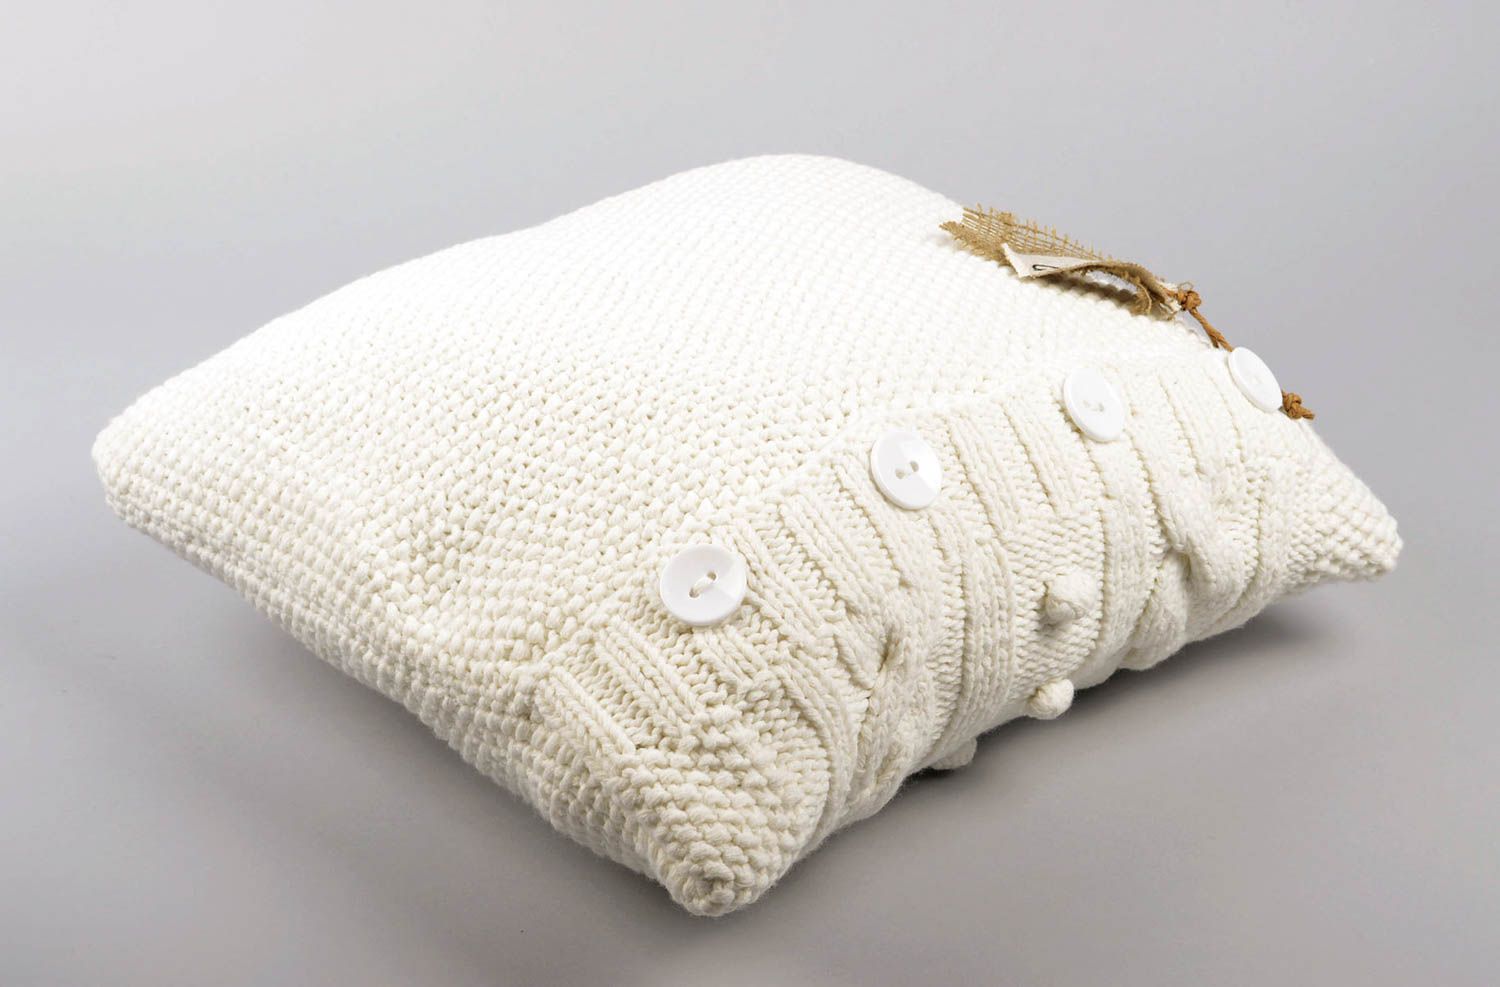 knitted pillow ideas